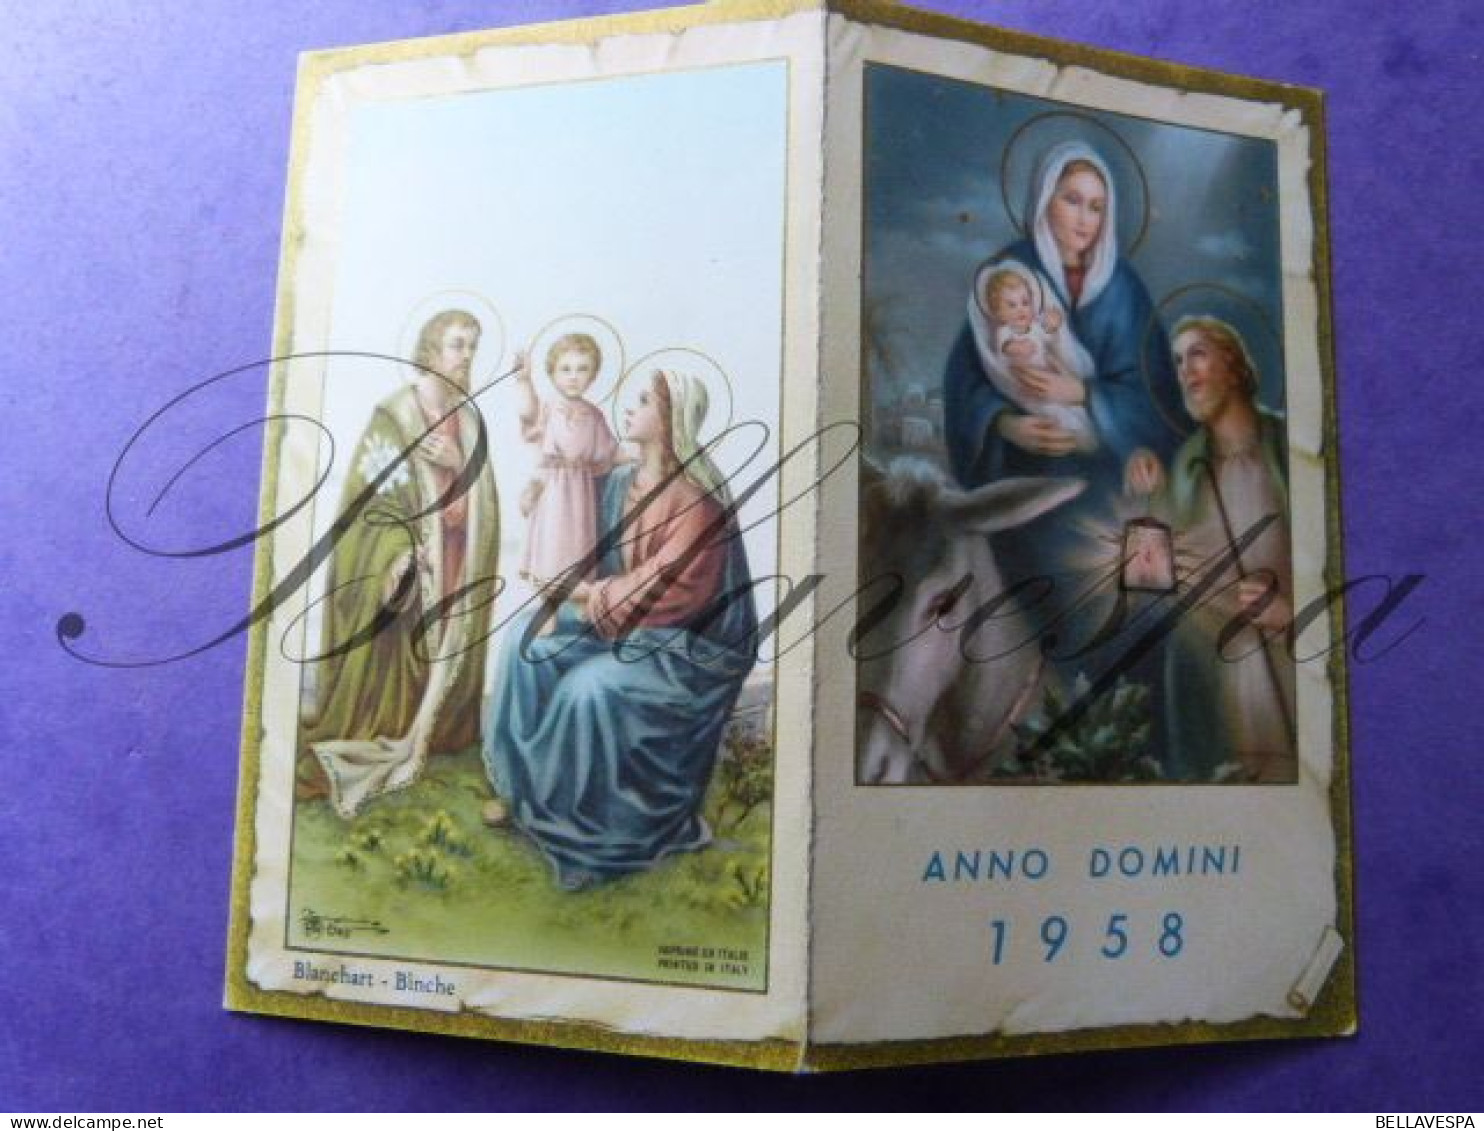 Anno Domino 1958 Blanchart Binche  A.R. Italy - Kommunion Und Konfirmazion